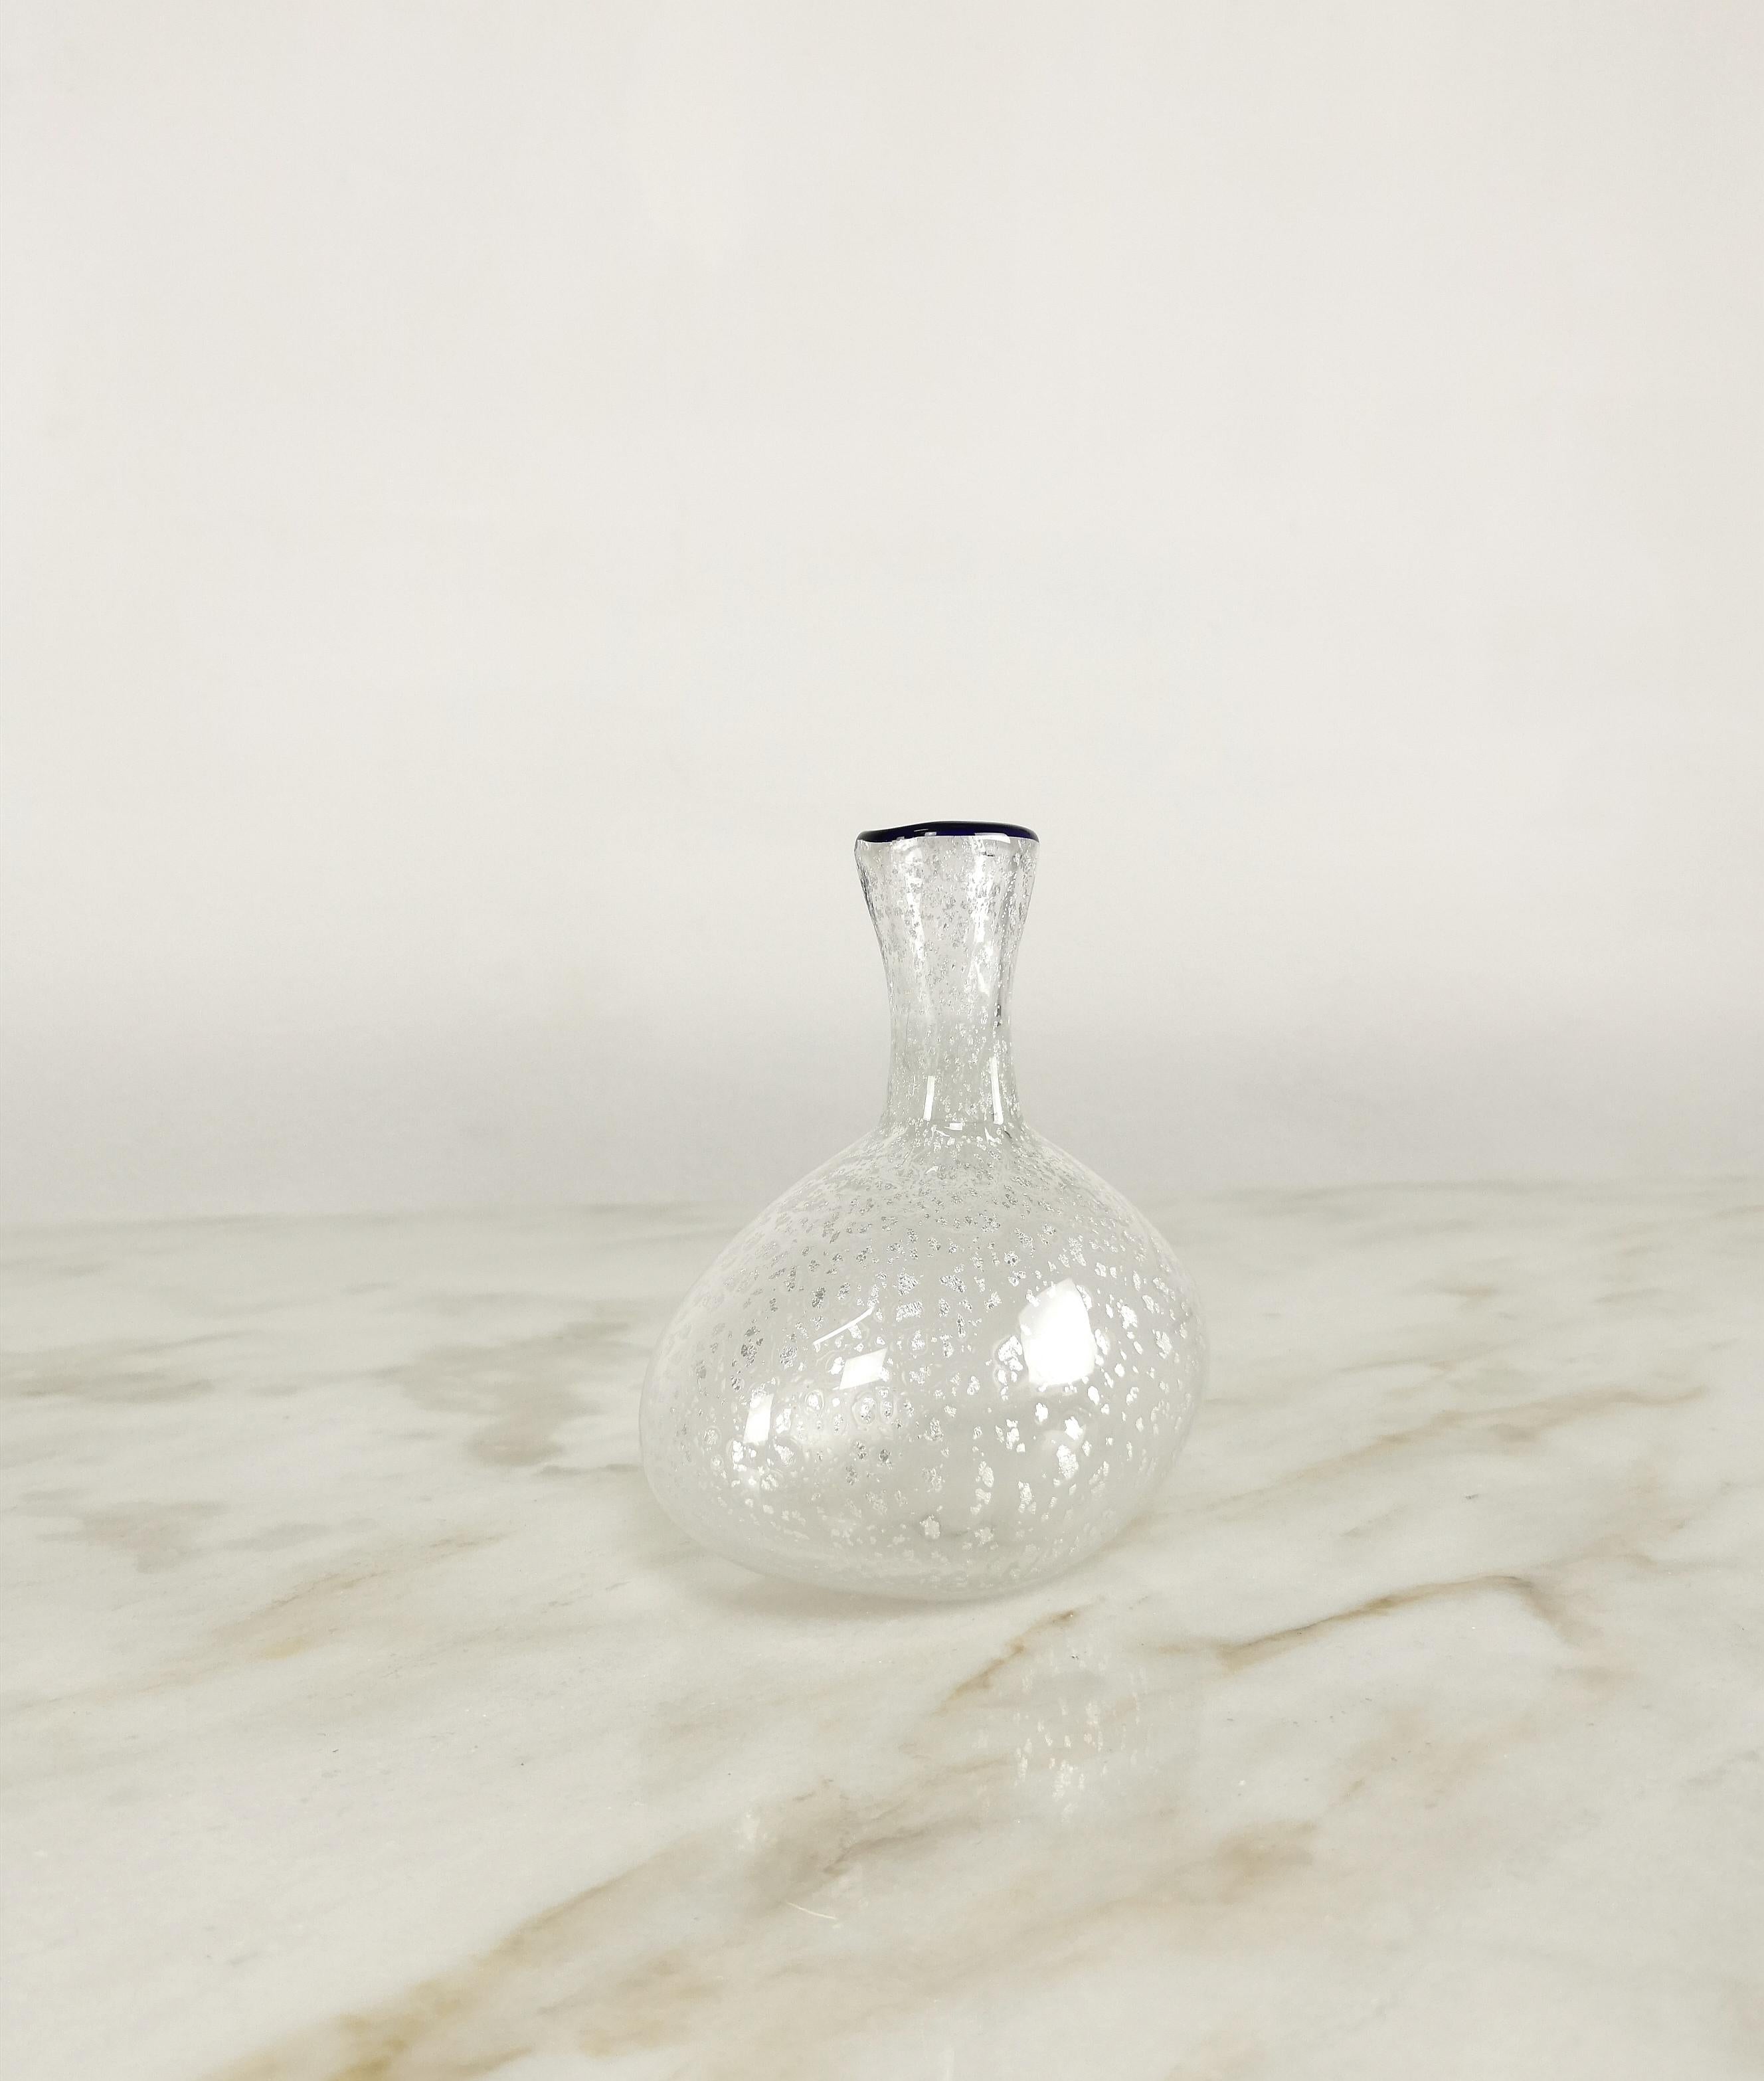 20th Century Vase Murano Glass Decorative Object Midcentury Italian Design 1970s For Sale